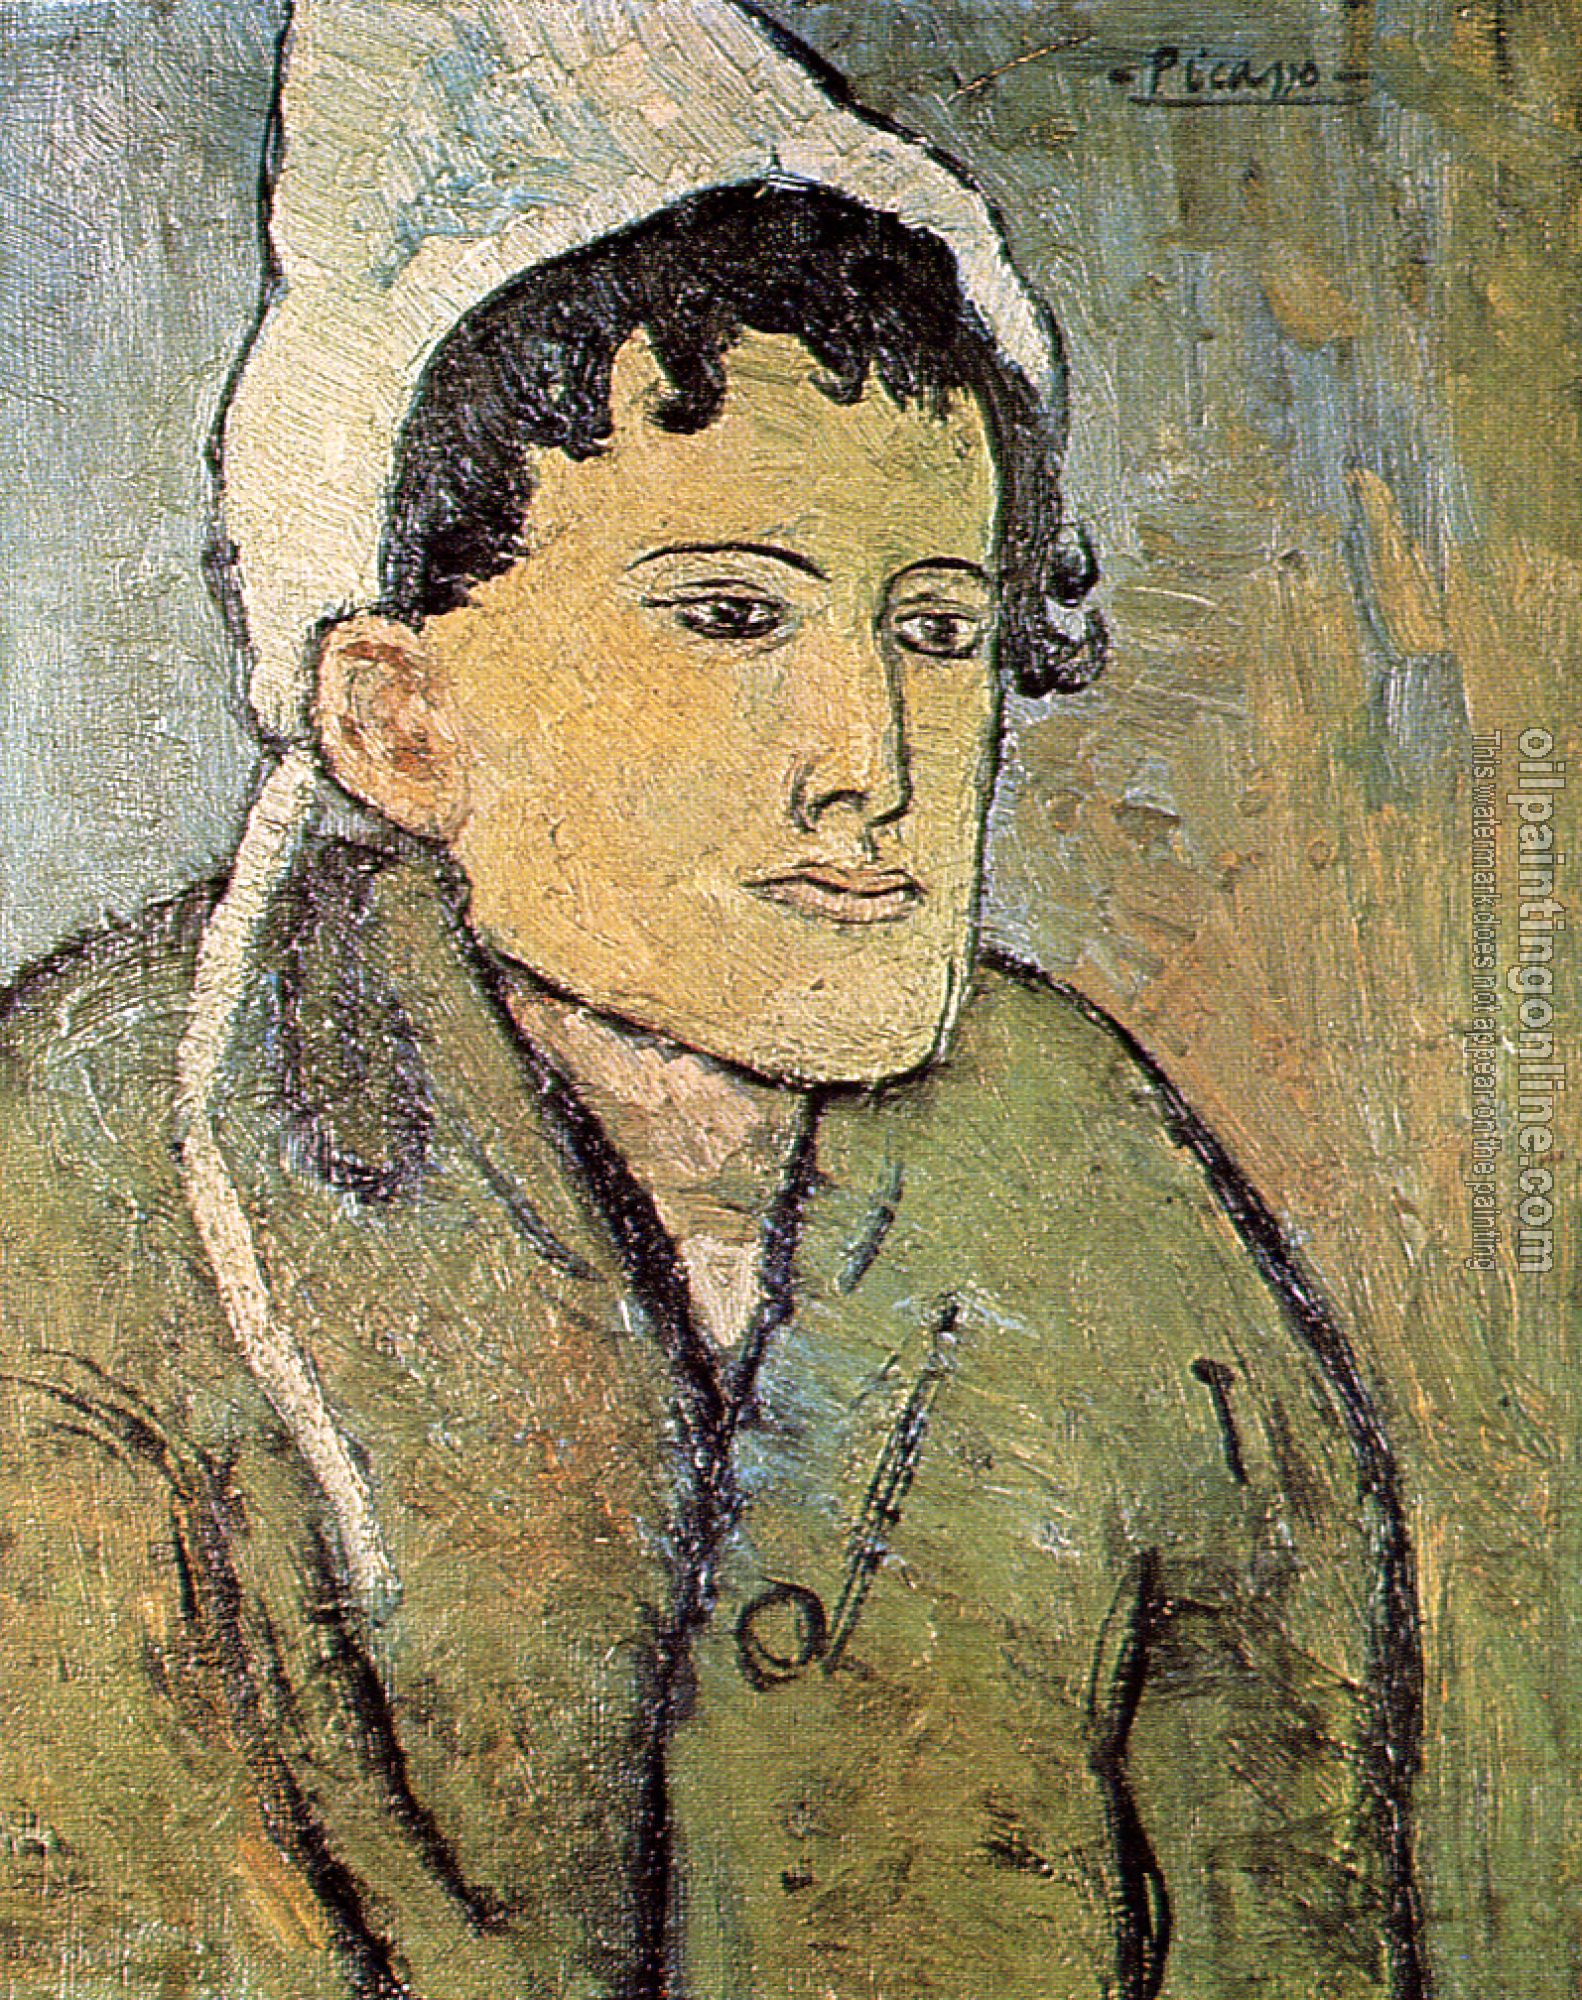 Picasso, Pablo - the woman in a bonnet